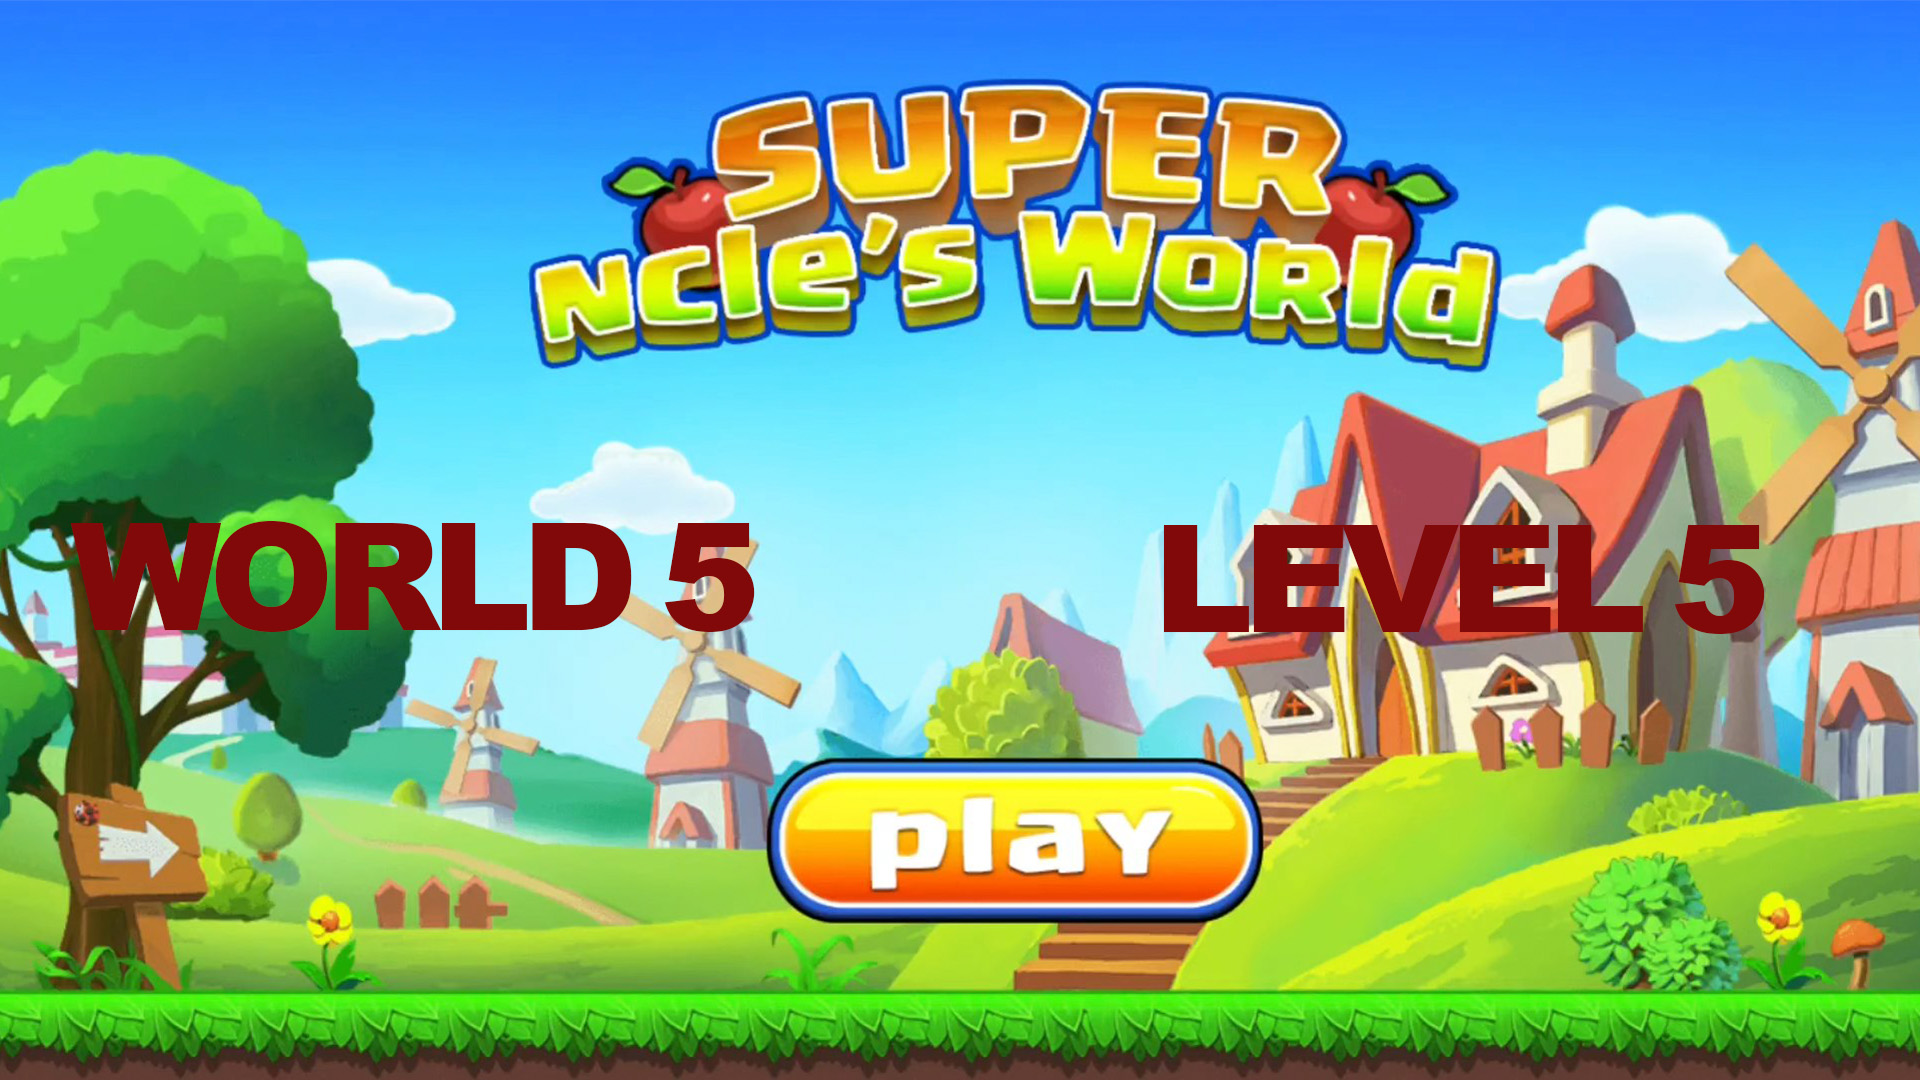 Super ncle's  World 5. Level 5.